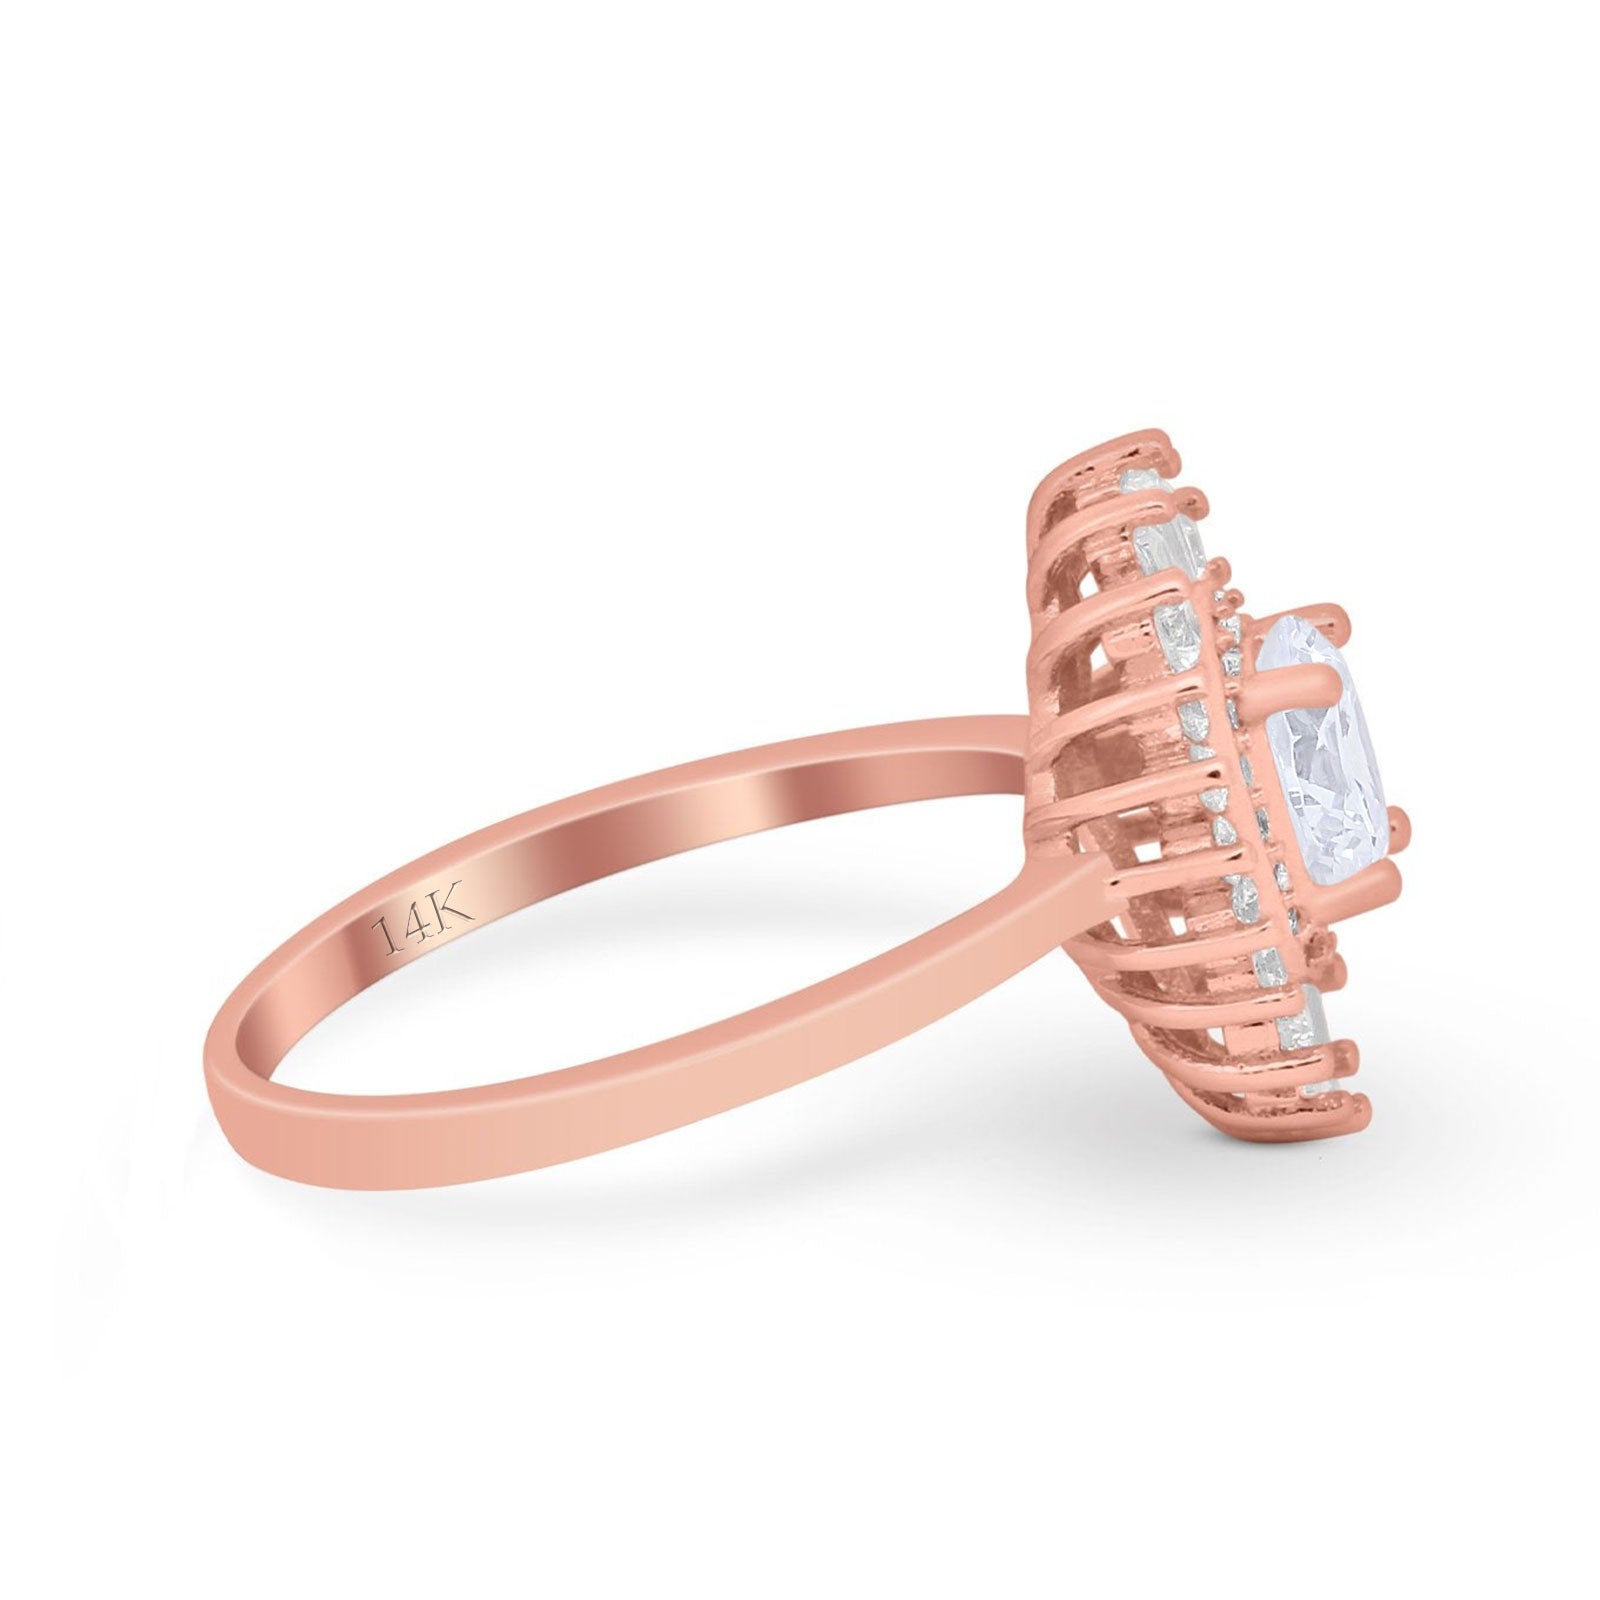 14K Gold Art Deco Round Shape Bridal Simulated Cubic Zirconia Wedding Engagement Ring